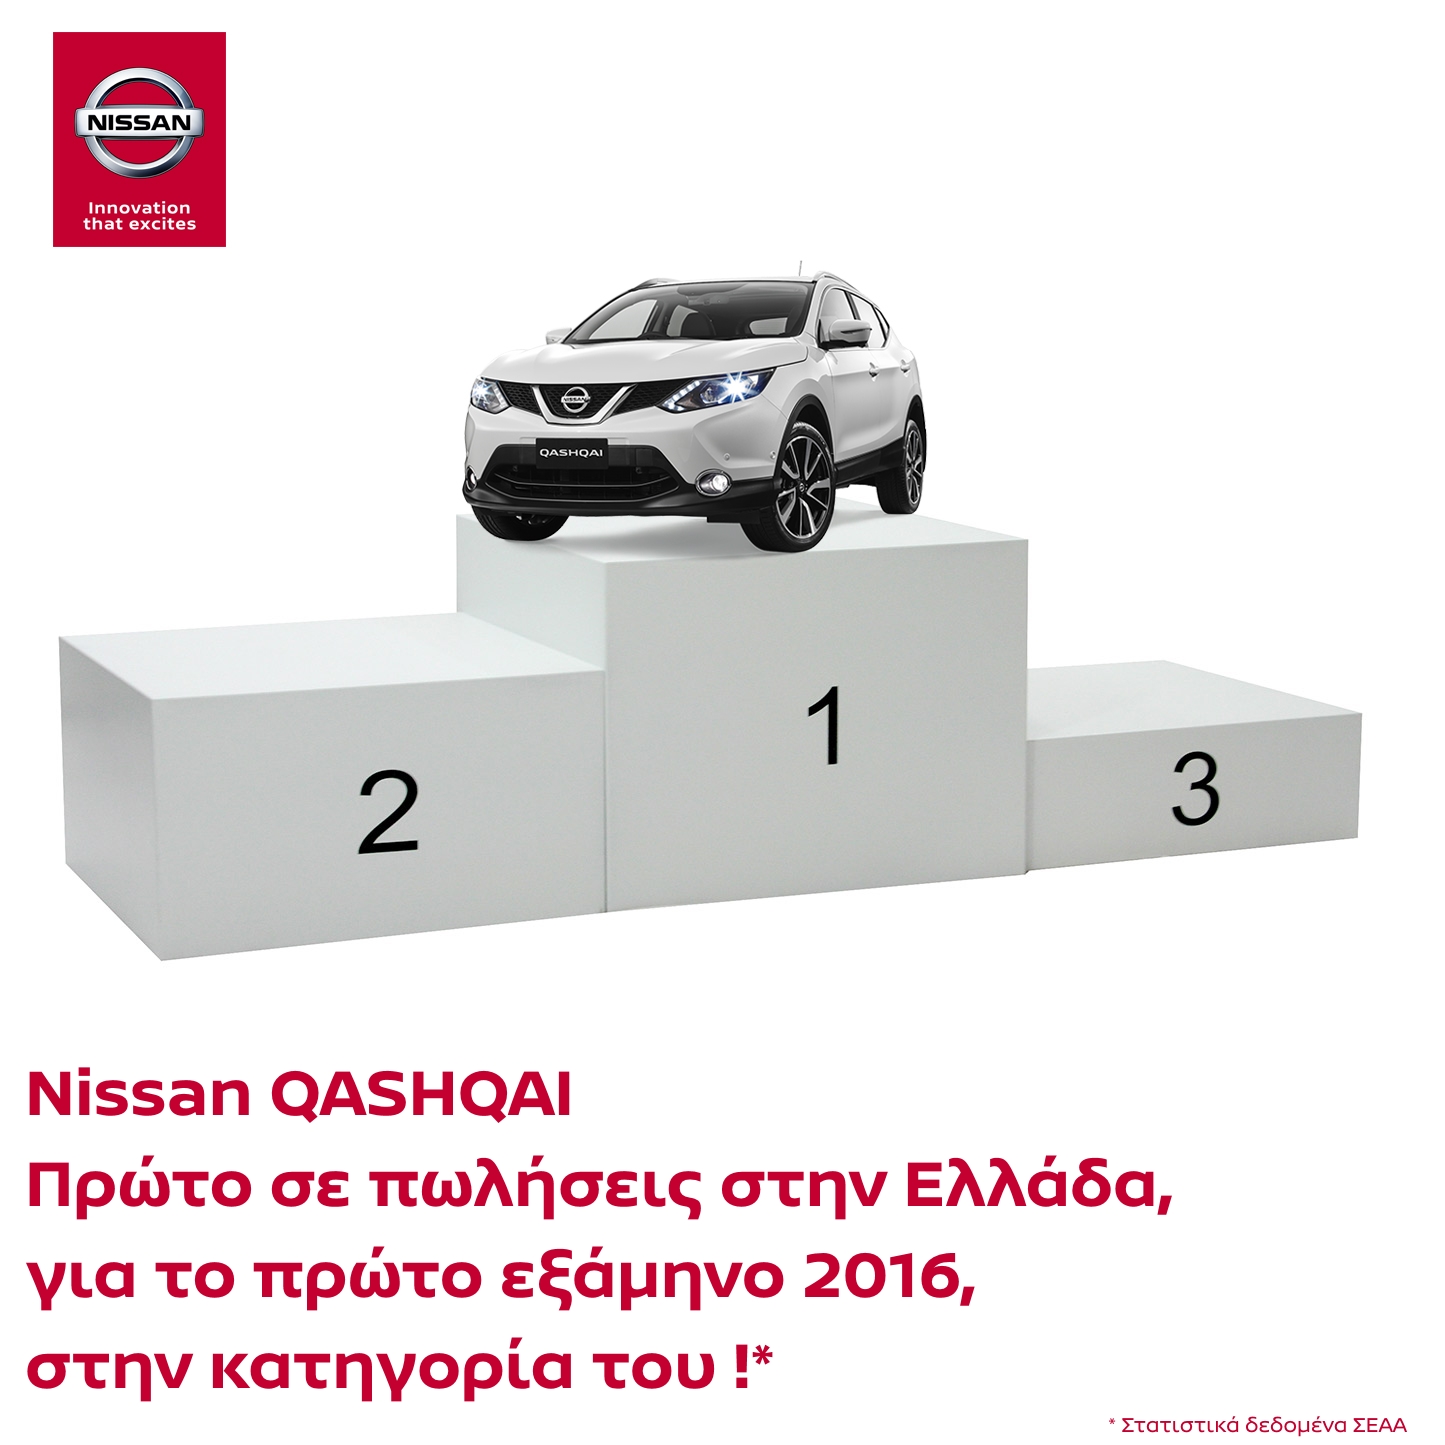 Qashqai2Bchamp Το Nissan QASHQAI πρώτο σε πωλήσεις, πανελλαδικά, στην κατηγορία του!